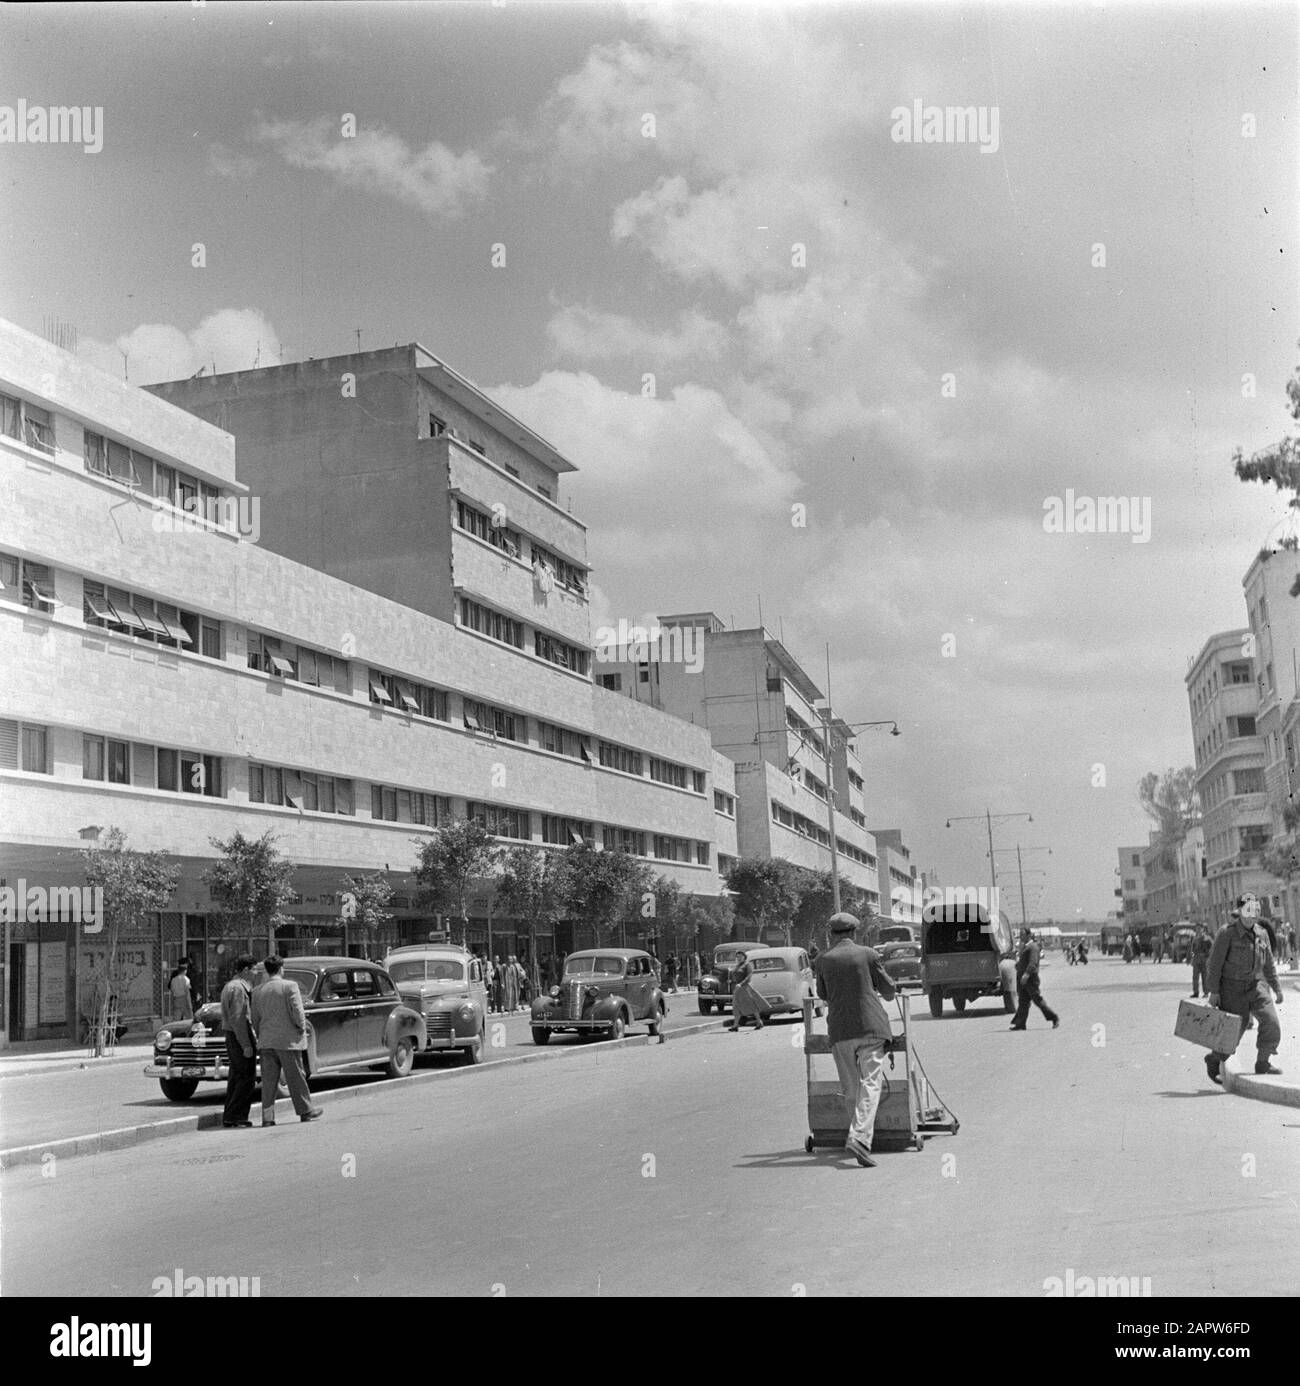 Israel 1948-1949: Haifa  Kingsway, the main street of the port area Date: 1948 Location: Haifa, Israel Keywords: cars, apartment blocks, cleaning services, street images, pedestrians Stock Photo